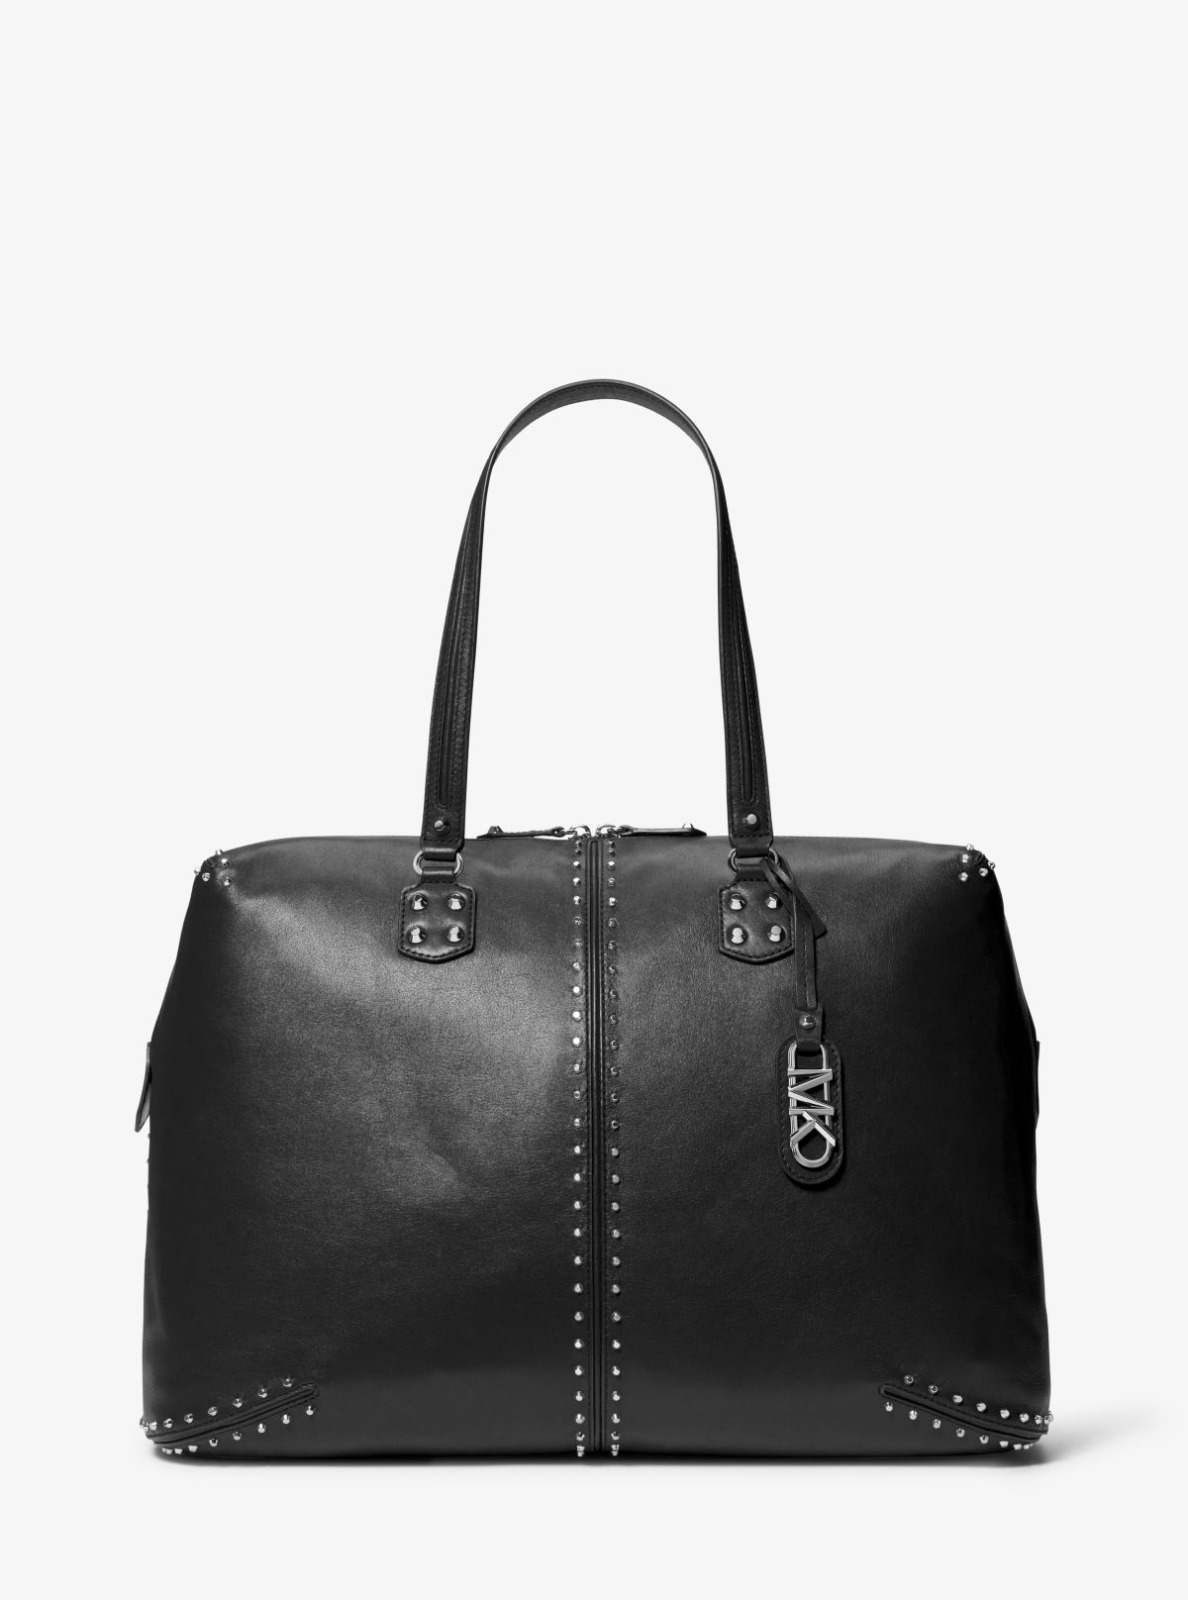 Michael Kors Women's Bag Black GOOFASH